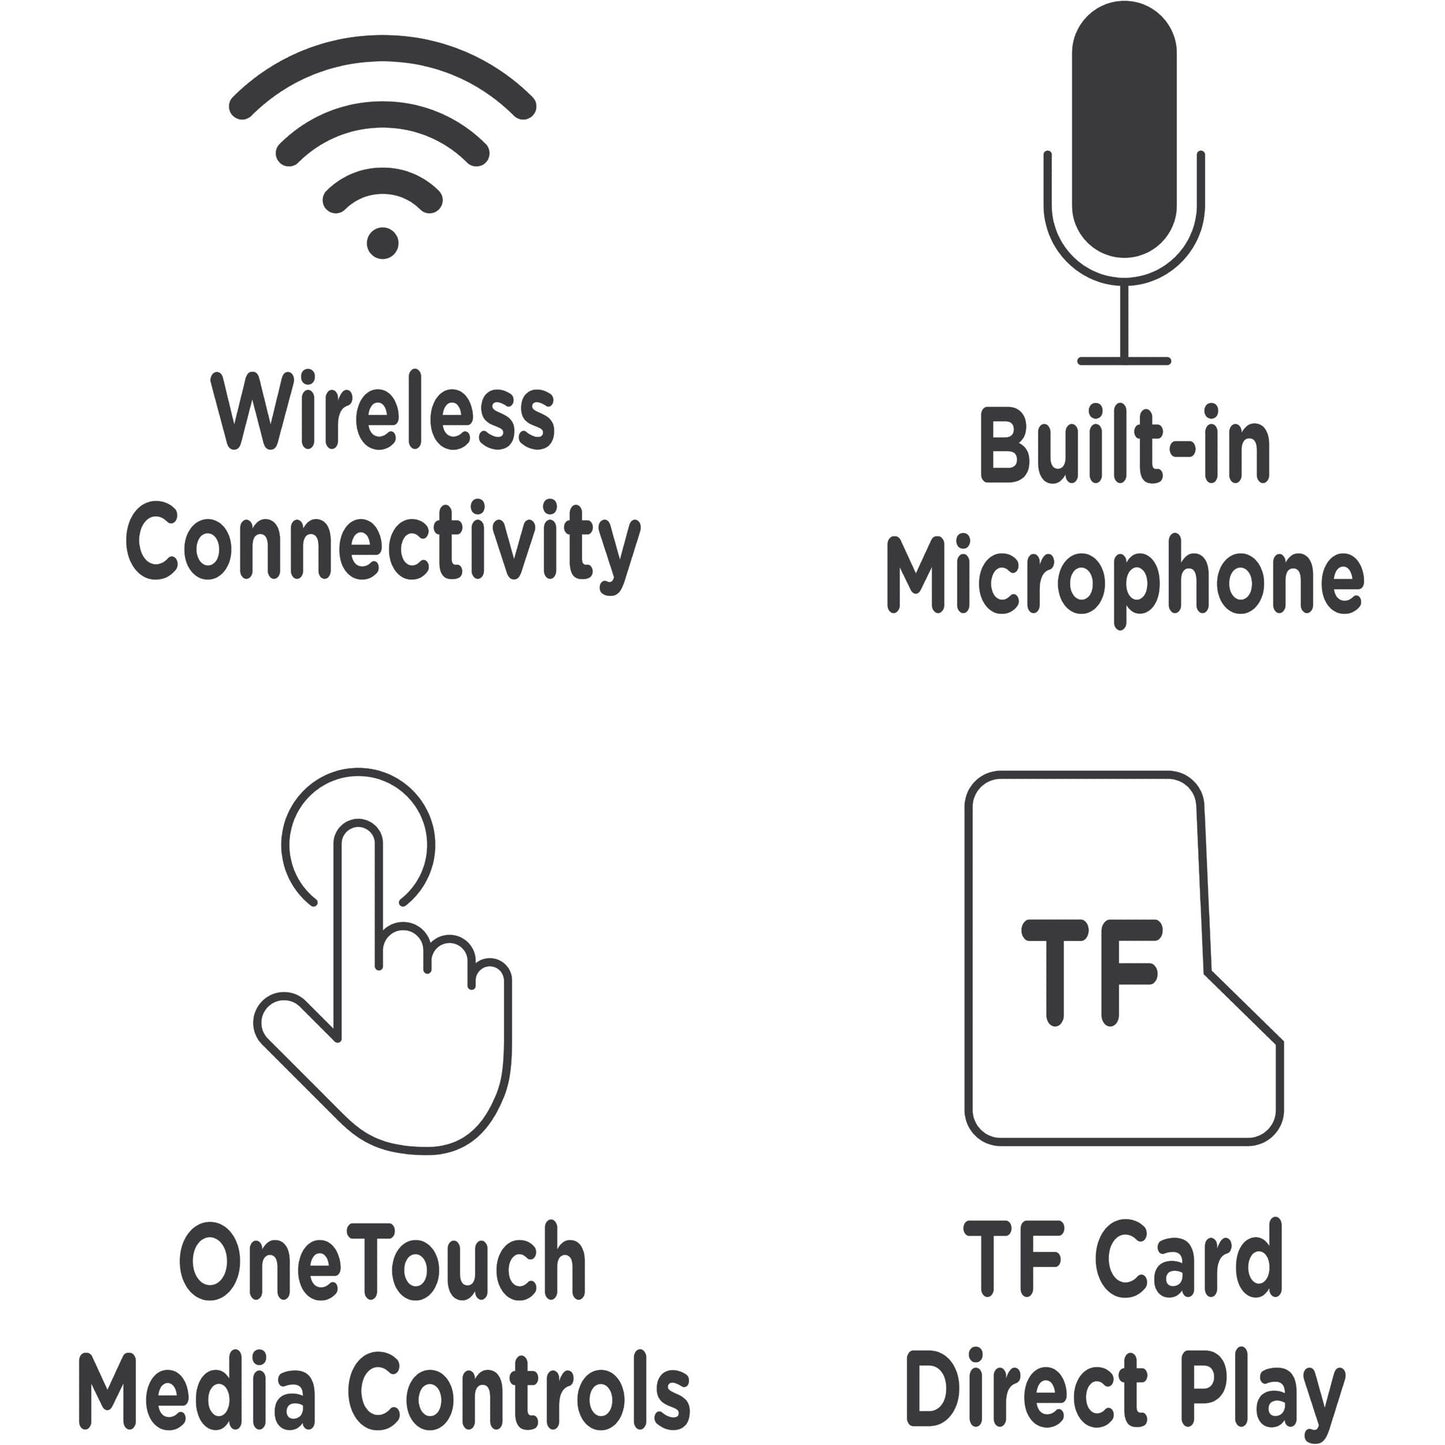 Morpheus 360 Tremors Wireless On-Ear Headphones - Bluetooth 5.0 Headset with Microphone - HP4500B